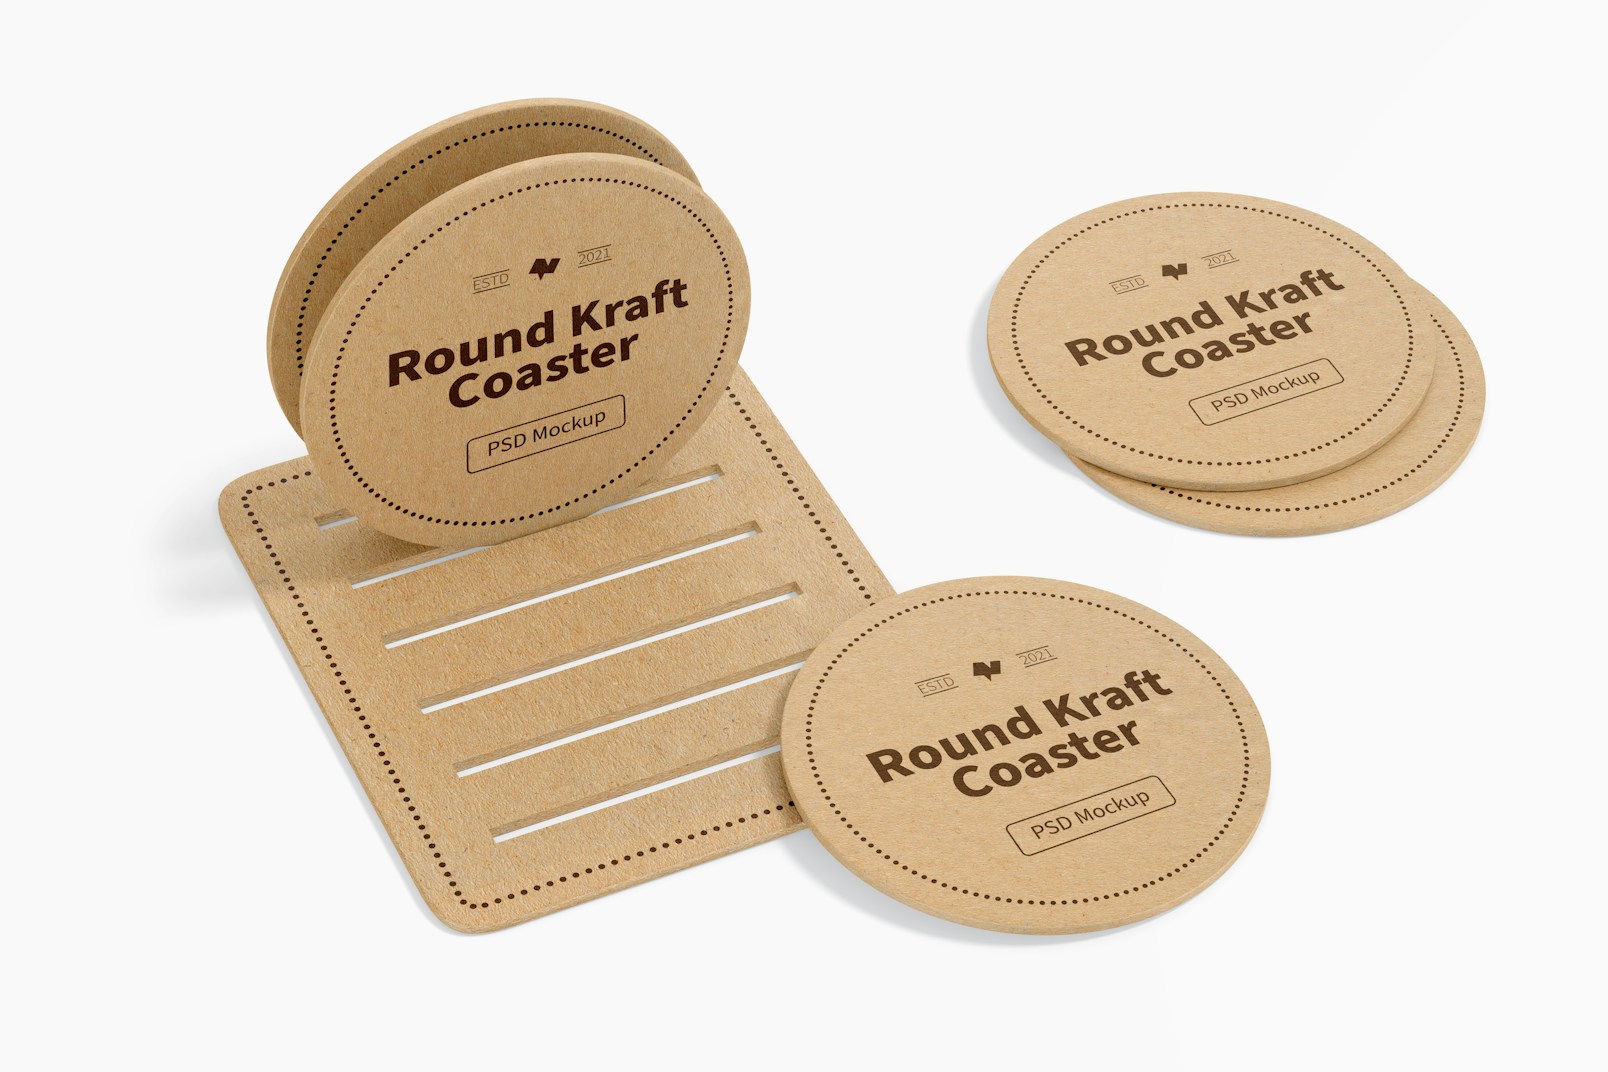 Round Kraft Coasters with Holder Mockup